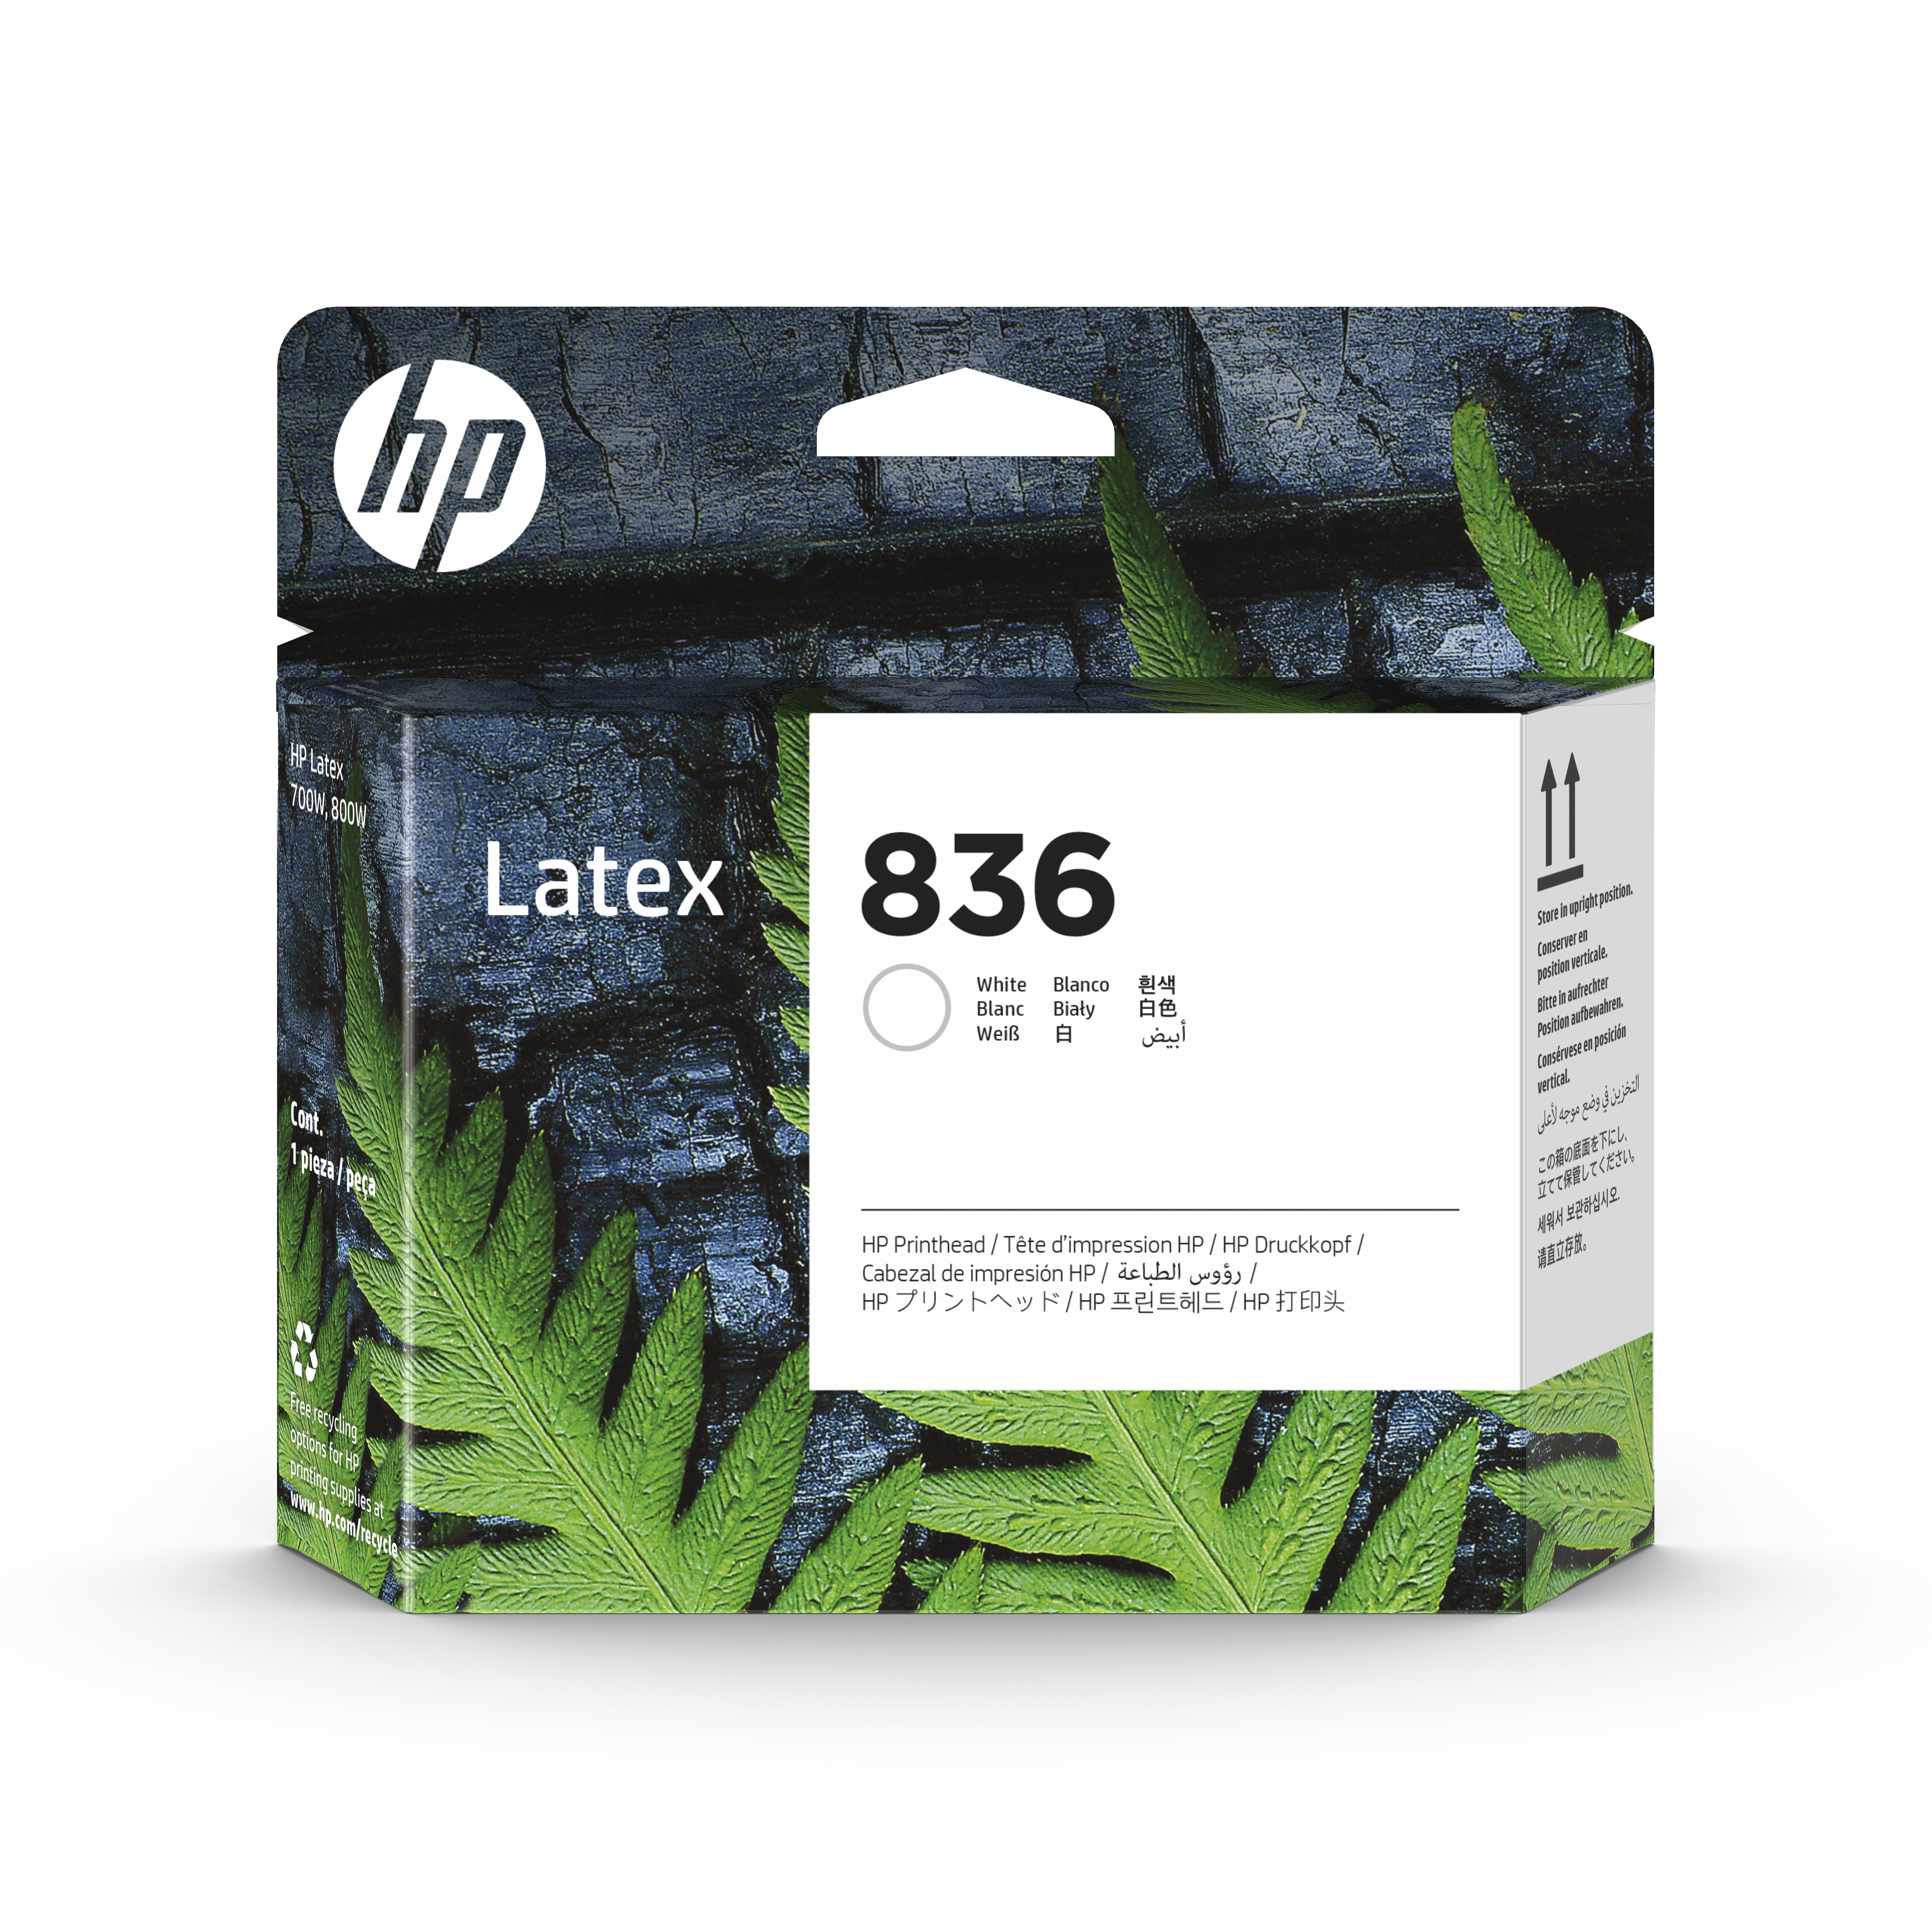 HP 836 White Latex Printhead